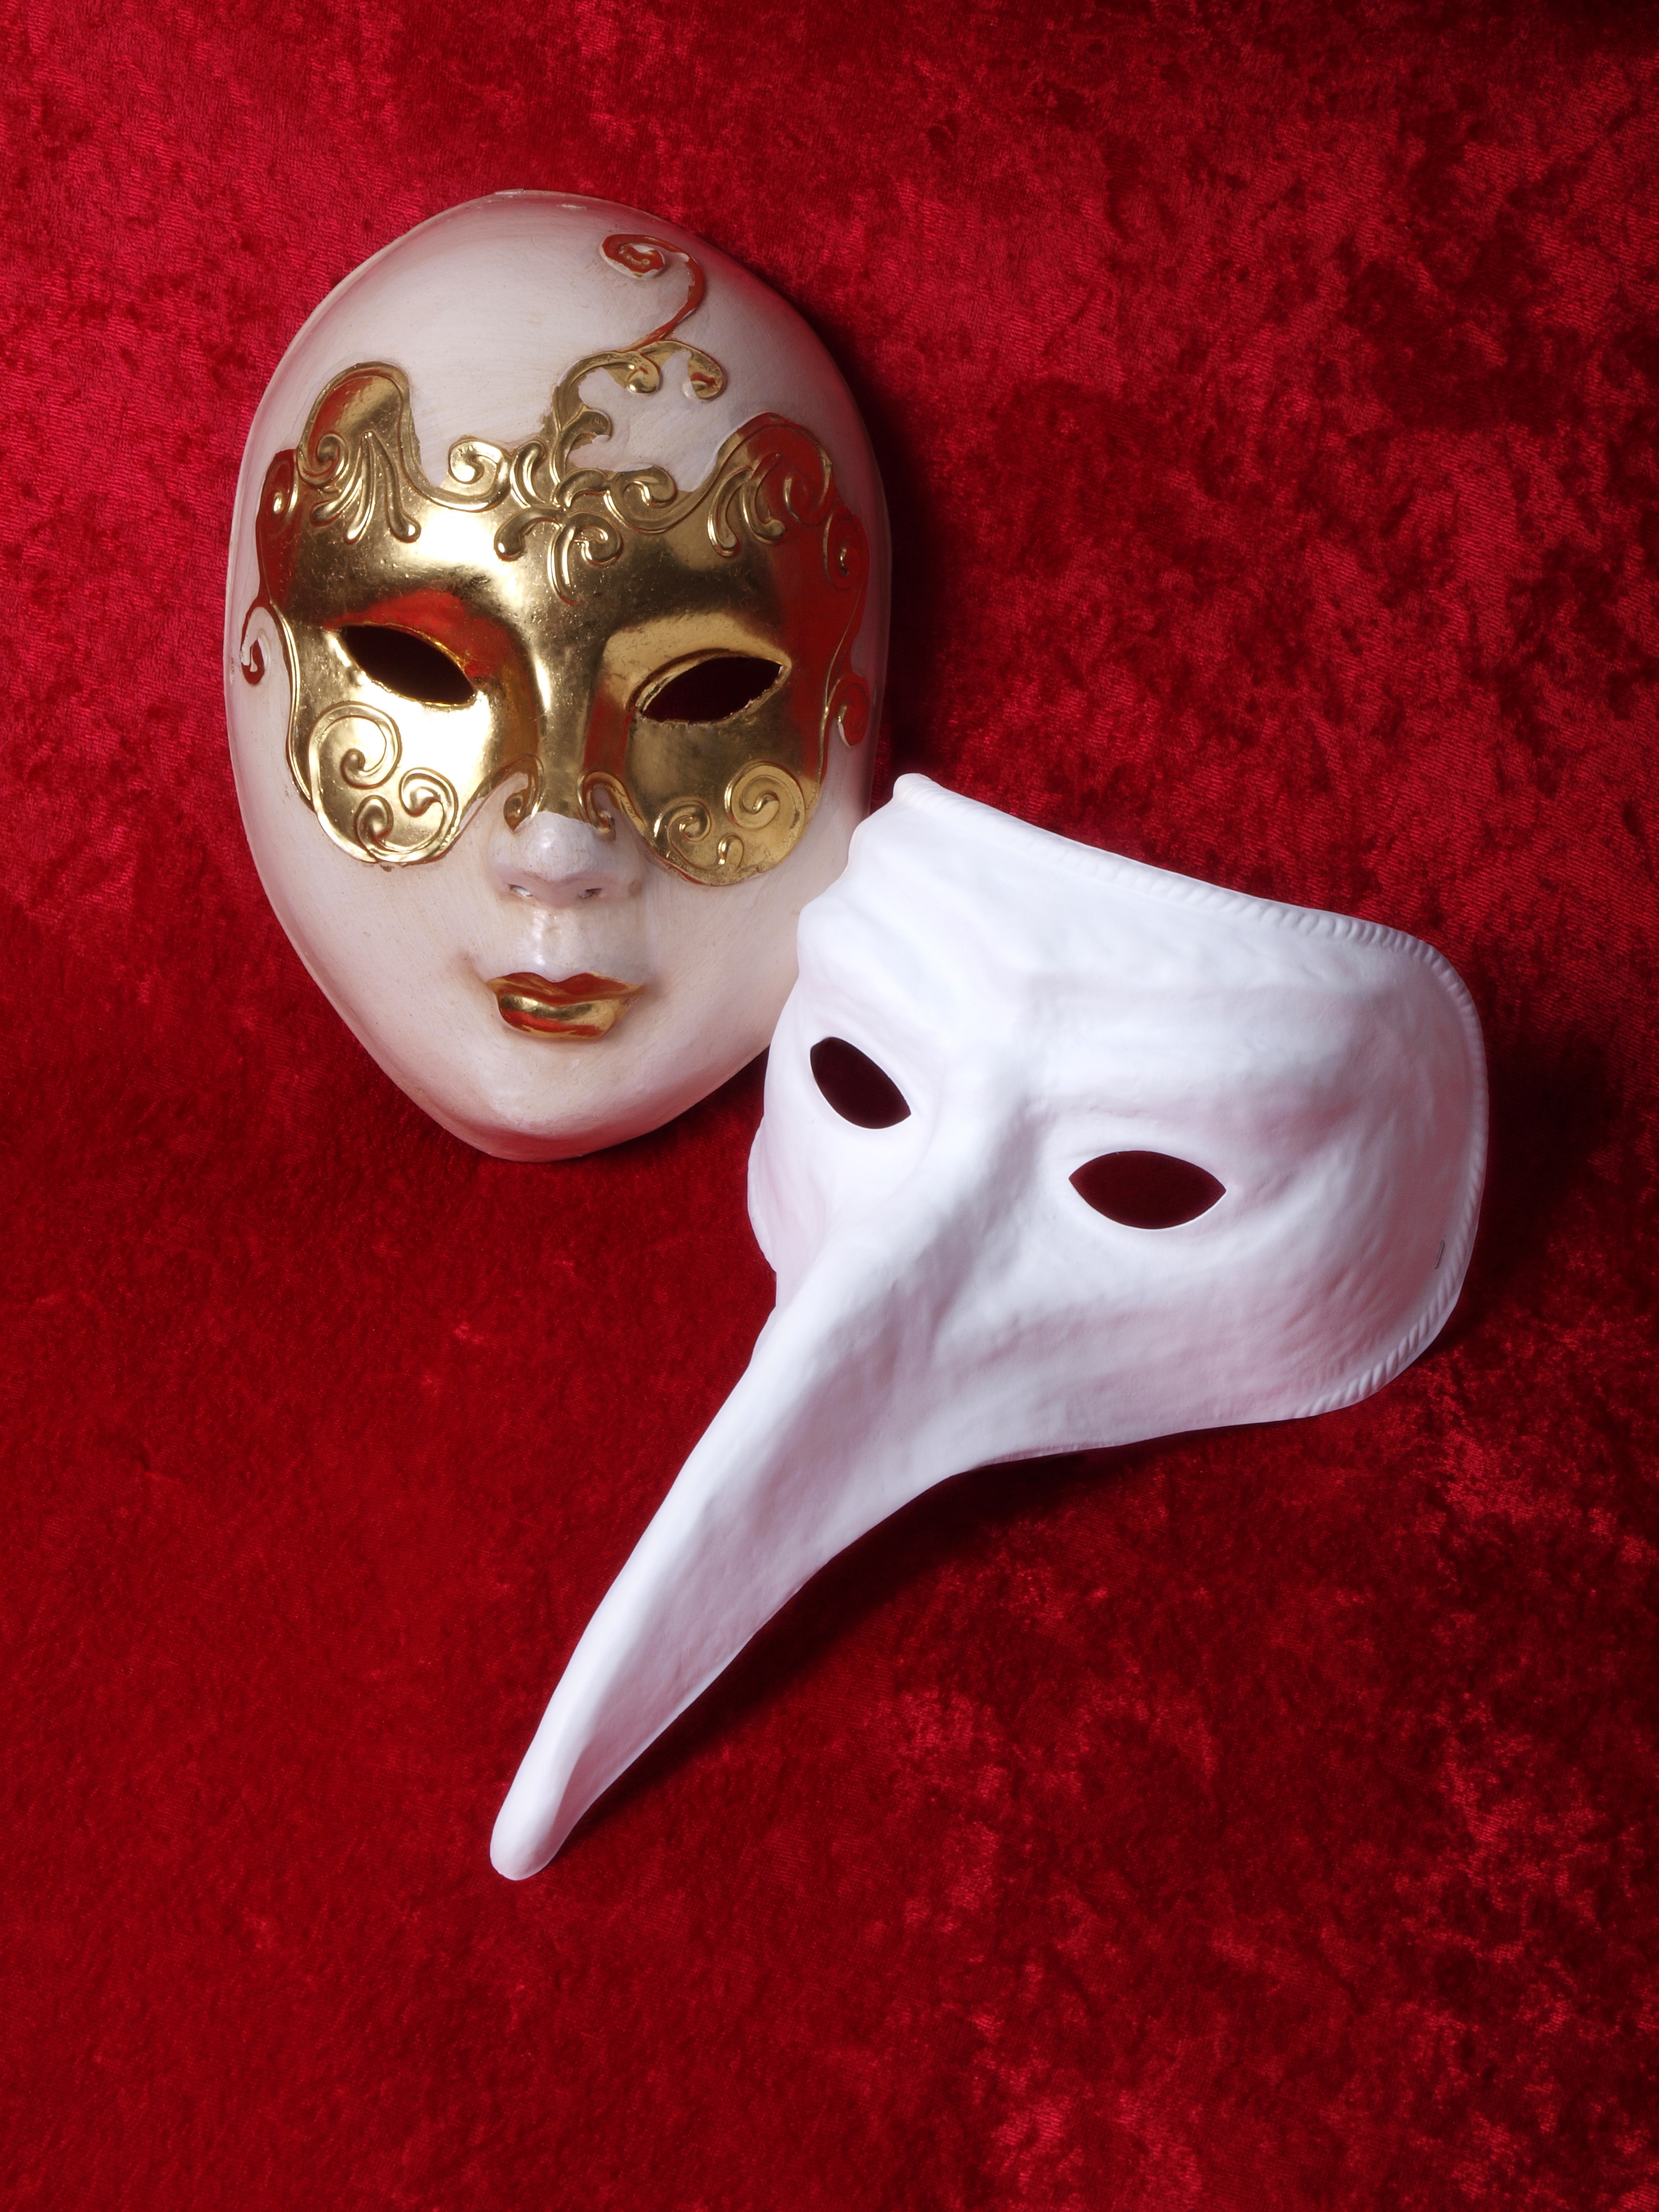 venetian and beak mask on red velevet background - theater or carnival concept